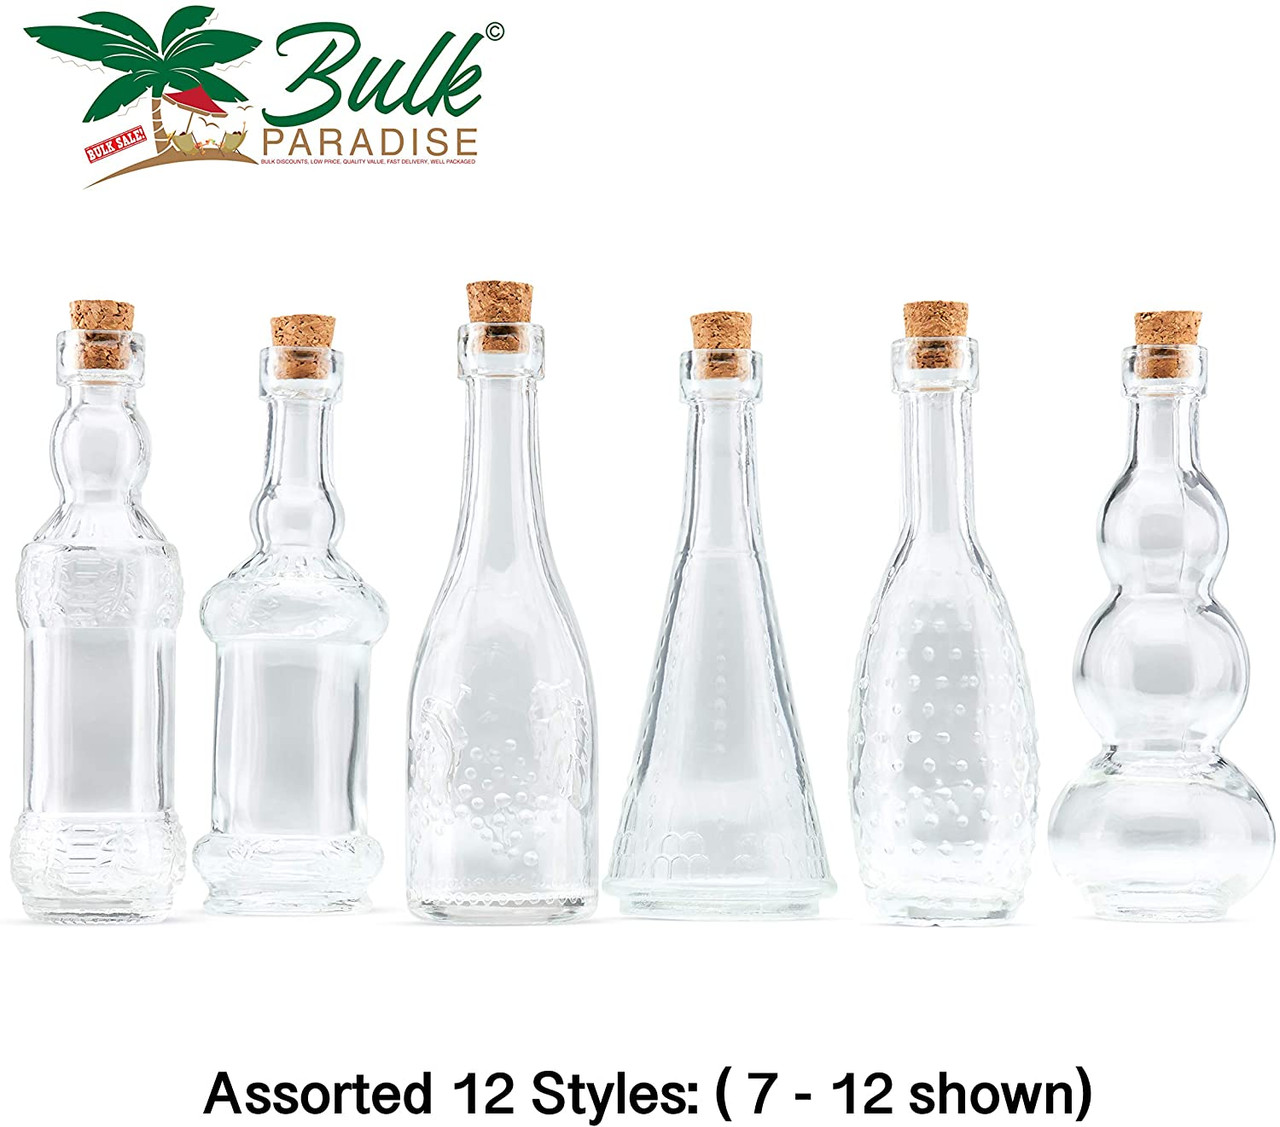 Decorative Clear Glass Bottles